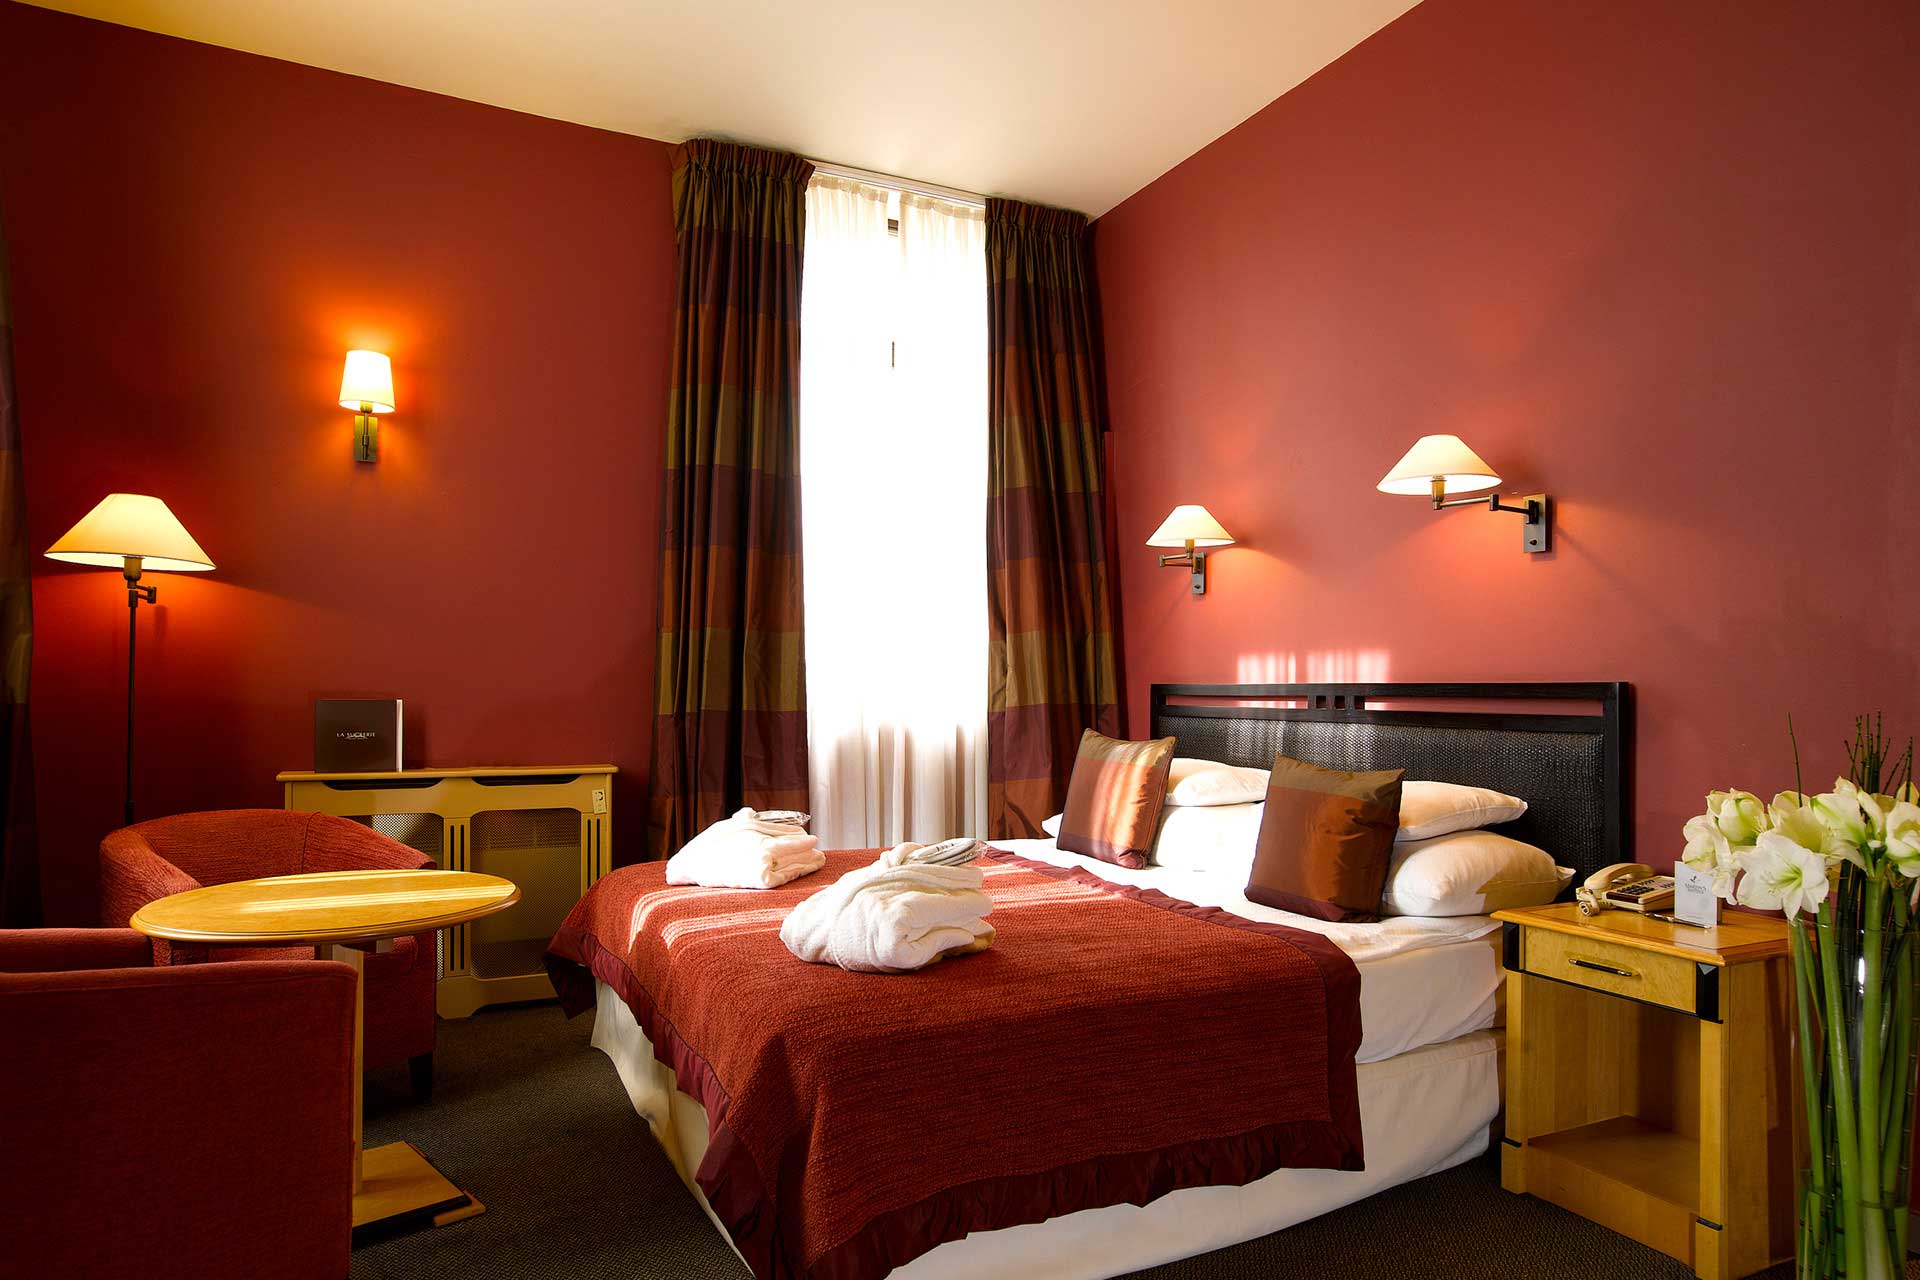 Golfexpedition-Golfreizen-België-Brussel-Grand-Hotel-Waterloo-course-bed-rood